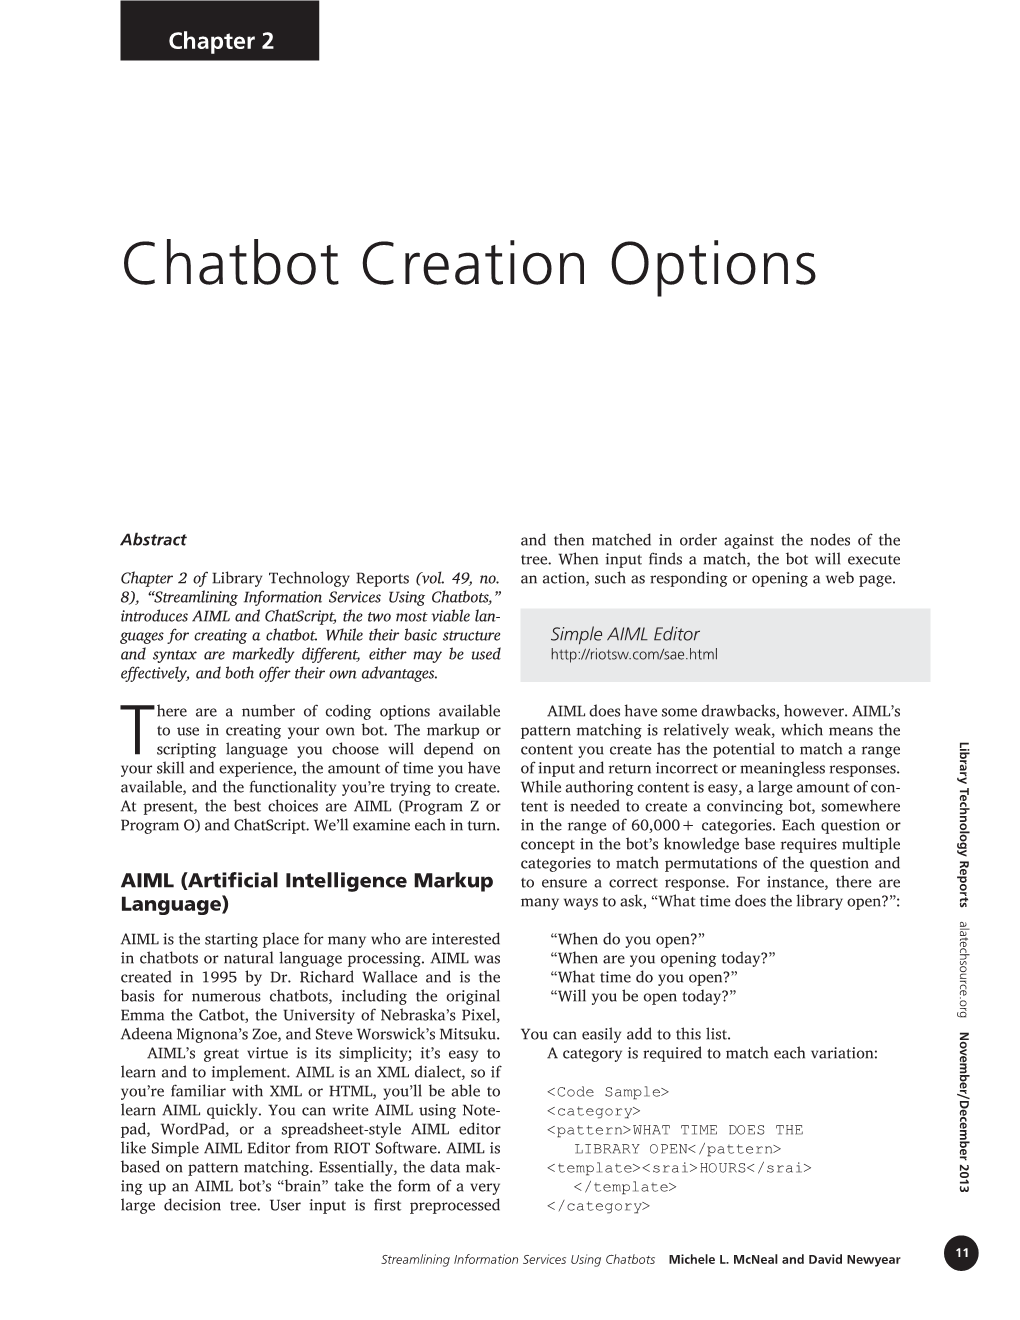 Chatbot Creation Options